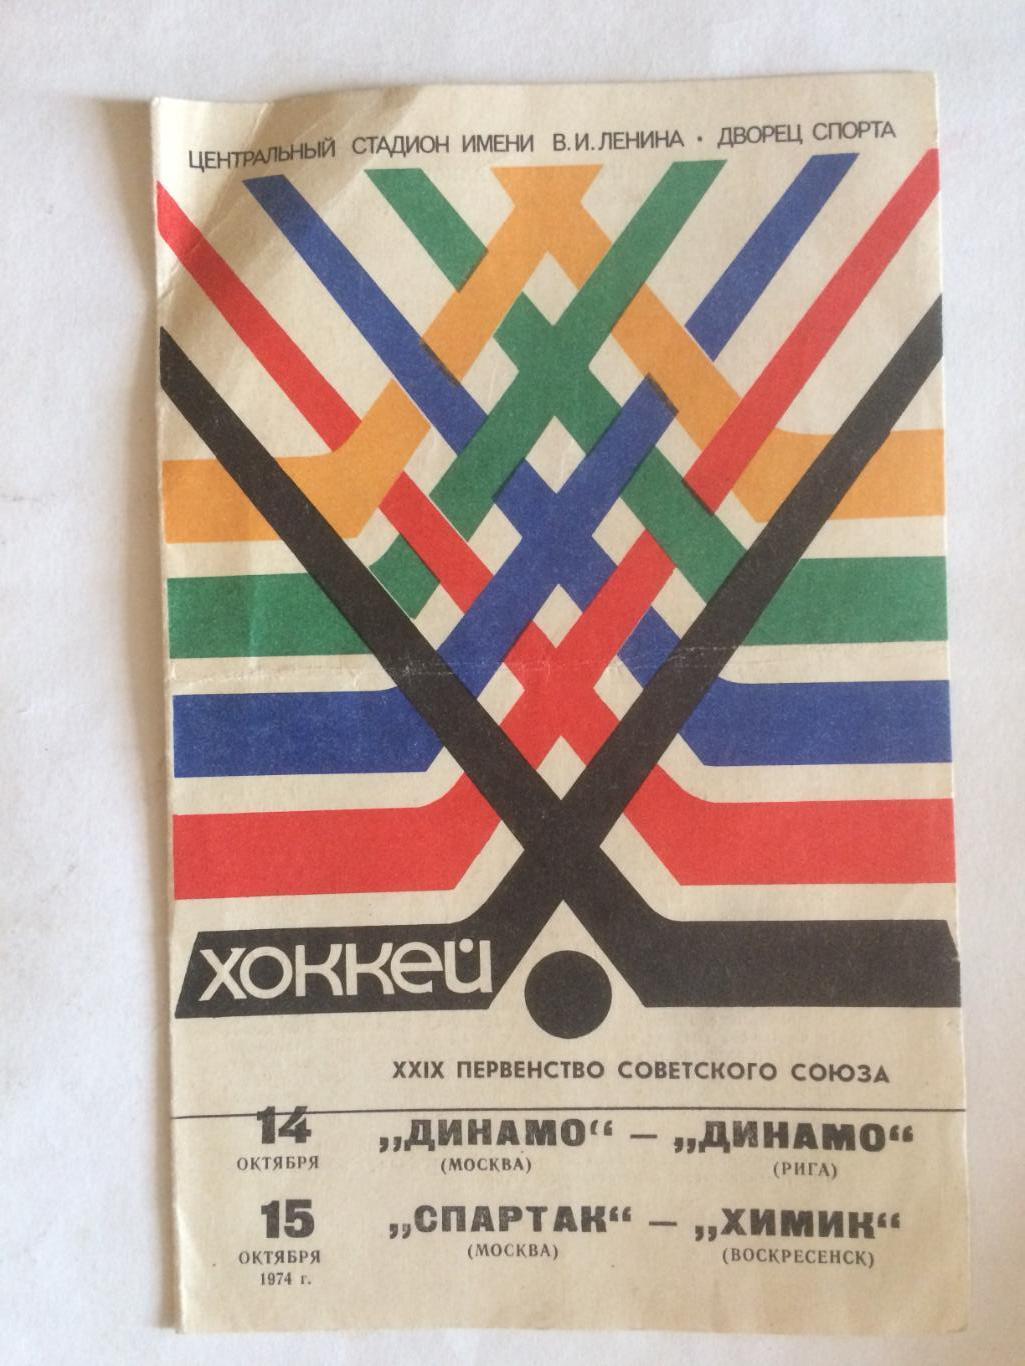 Хоккей Динамо Москва - Динамо Рига,Спартак - Химик Воскресенск 14,15.10.1974